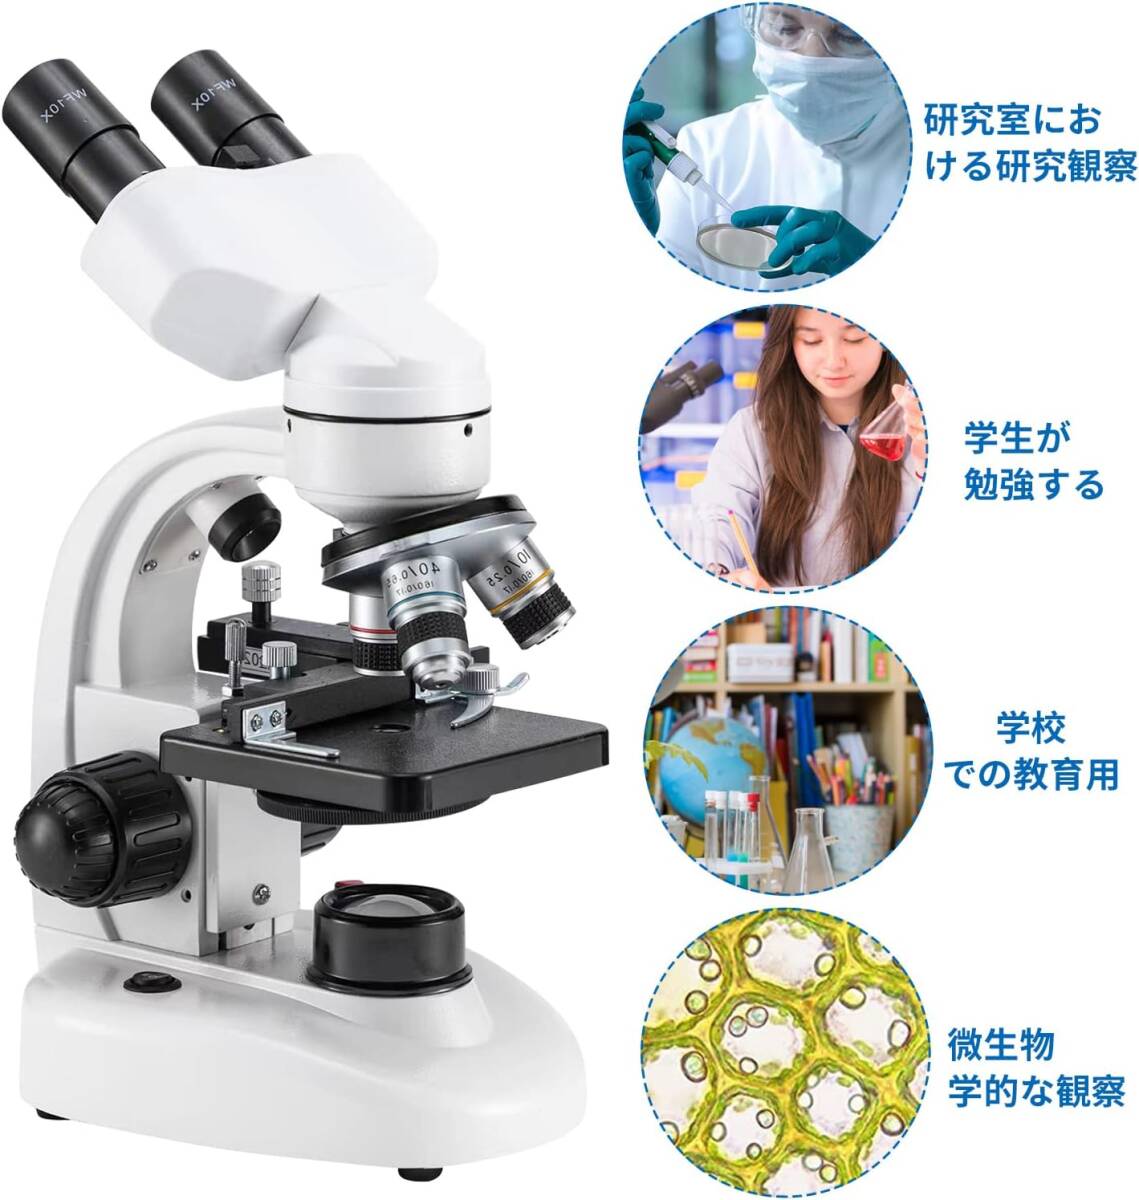 多機能複合双眼顕微鏡 40から2000倍 超拡大率 10X 25X広角目鏡 LED光源 XY軸キャリア台生物顕微鏡 カメラ付 研究 観察 学習 作業 微生物 _画像3